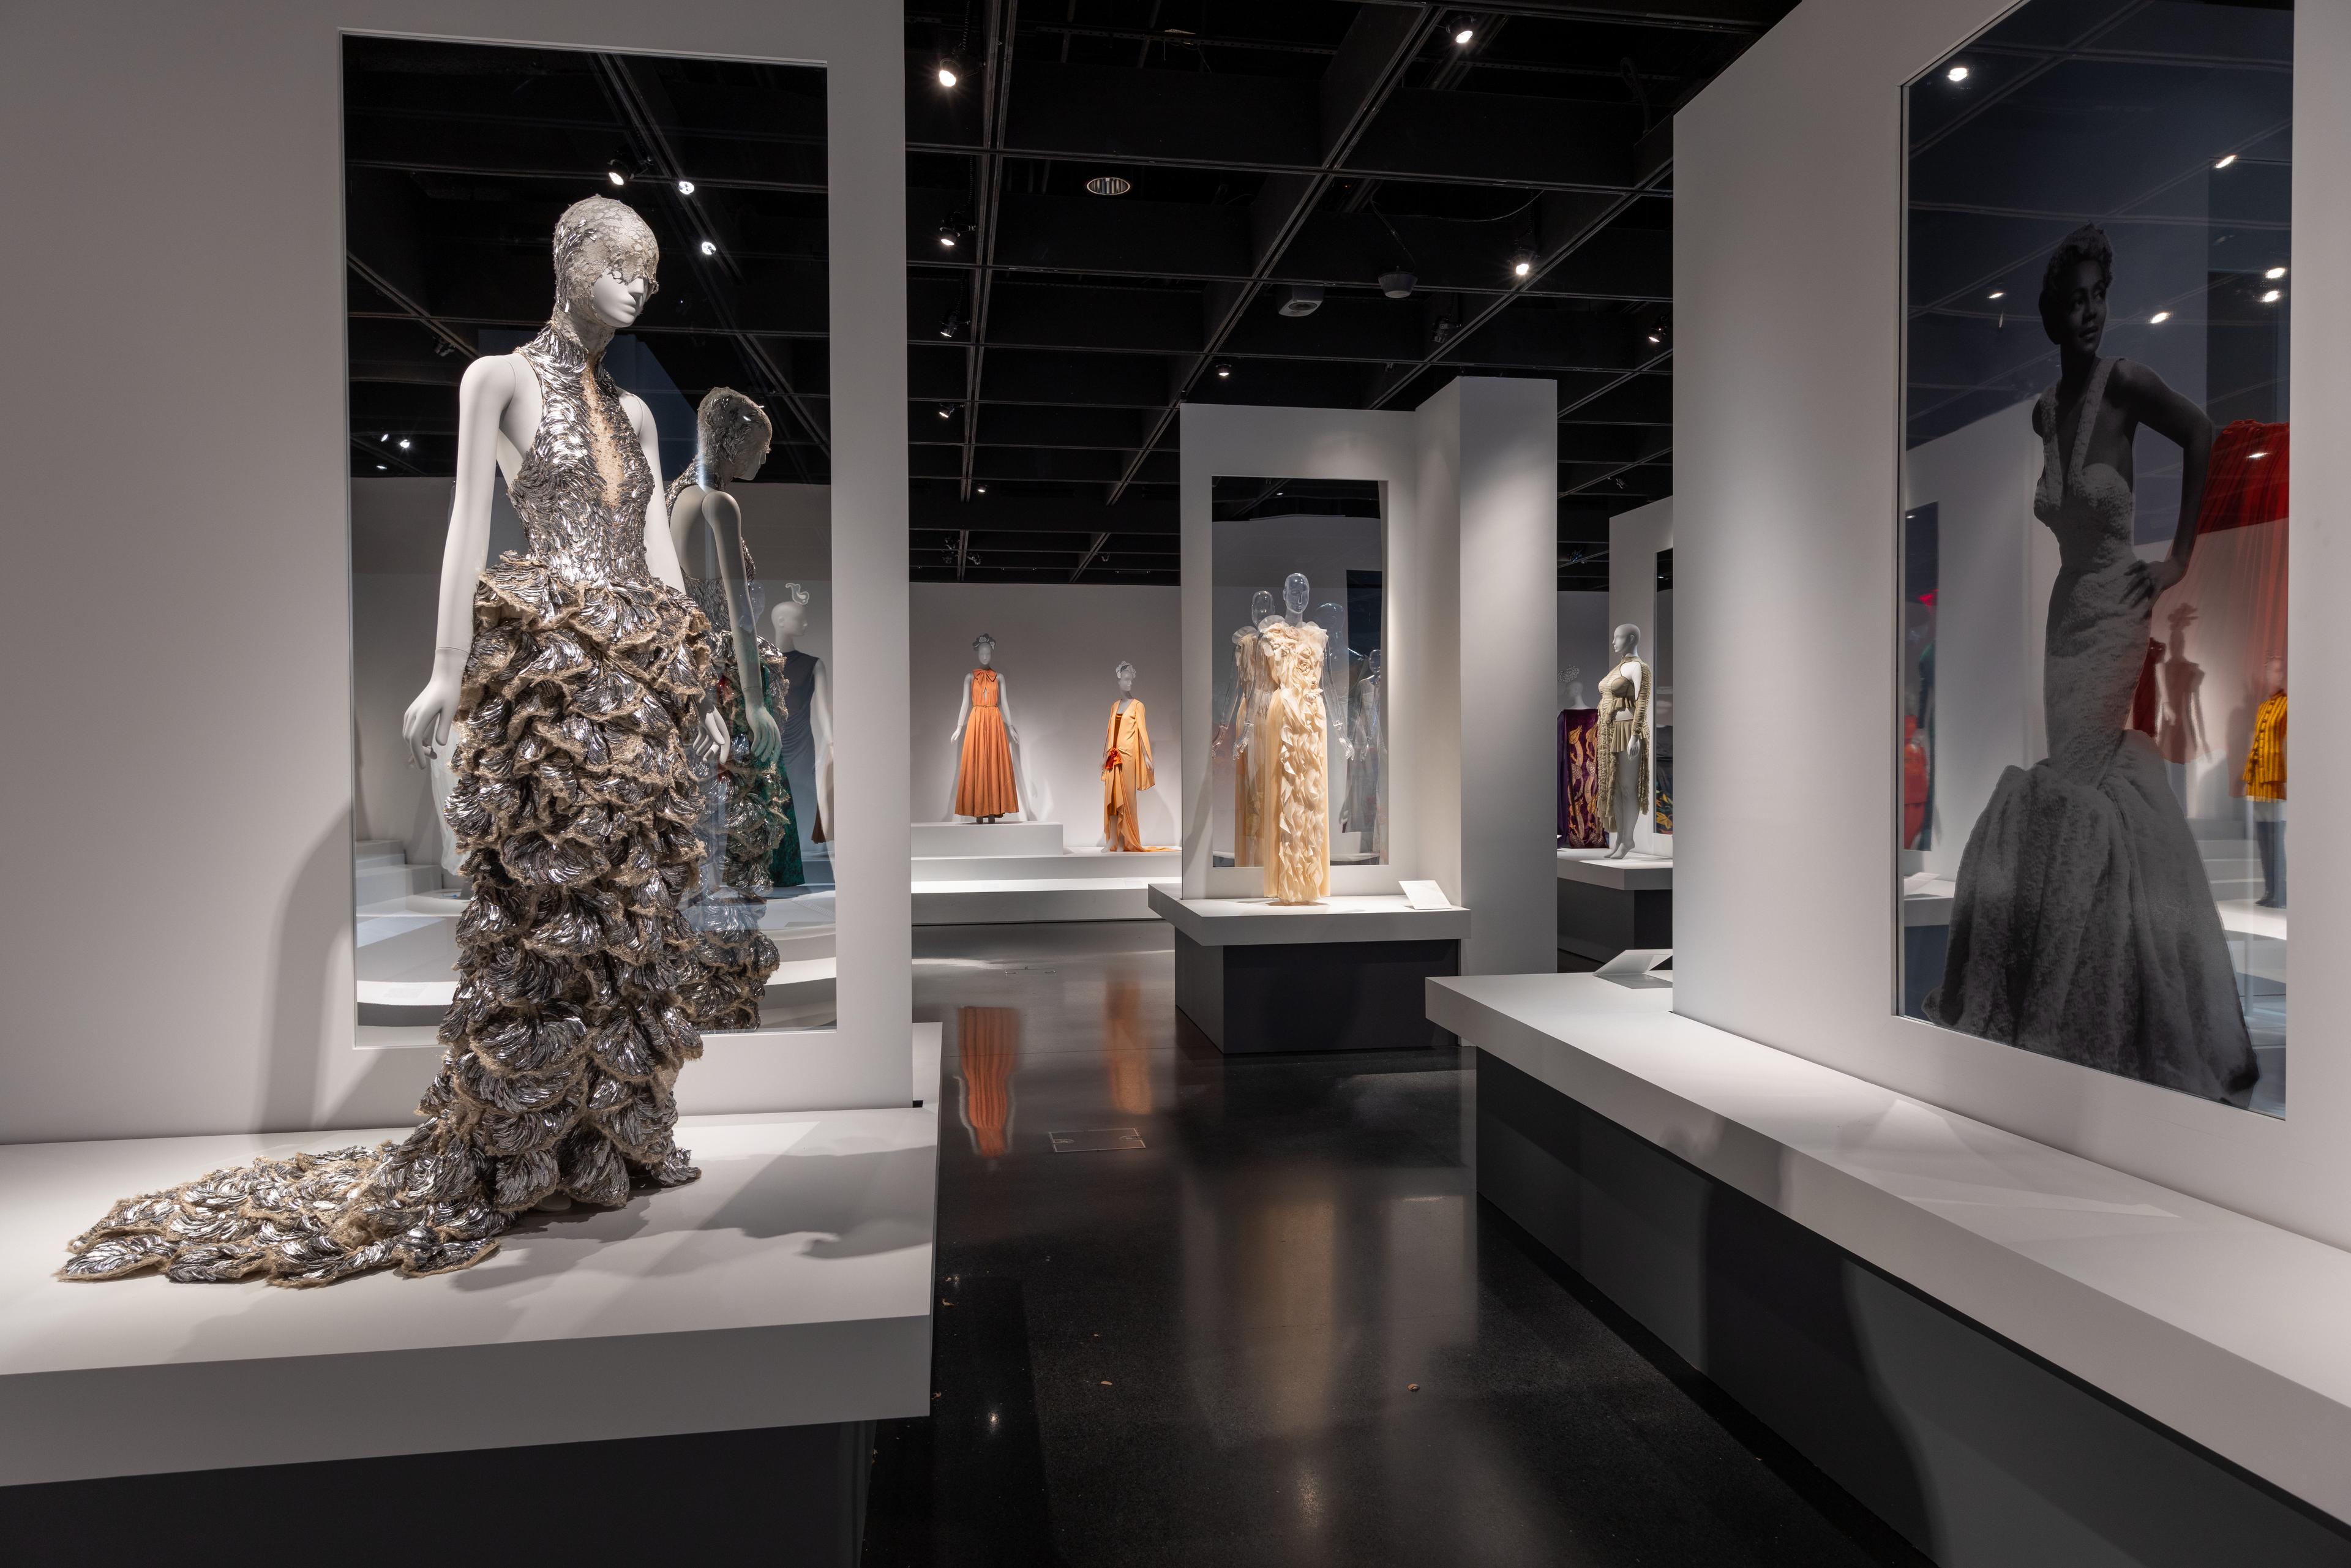 Women Dressing Women: A Lineage of Female Fashion Design - MetPublications  - The Metropolitan Museum of Art